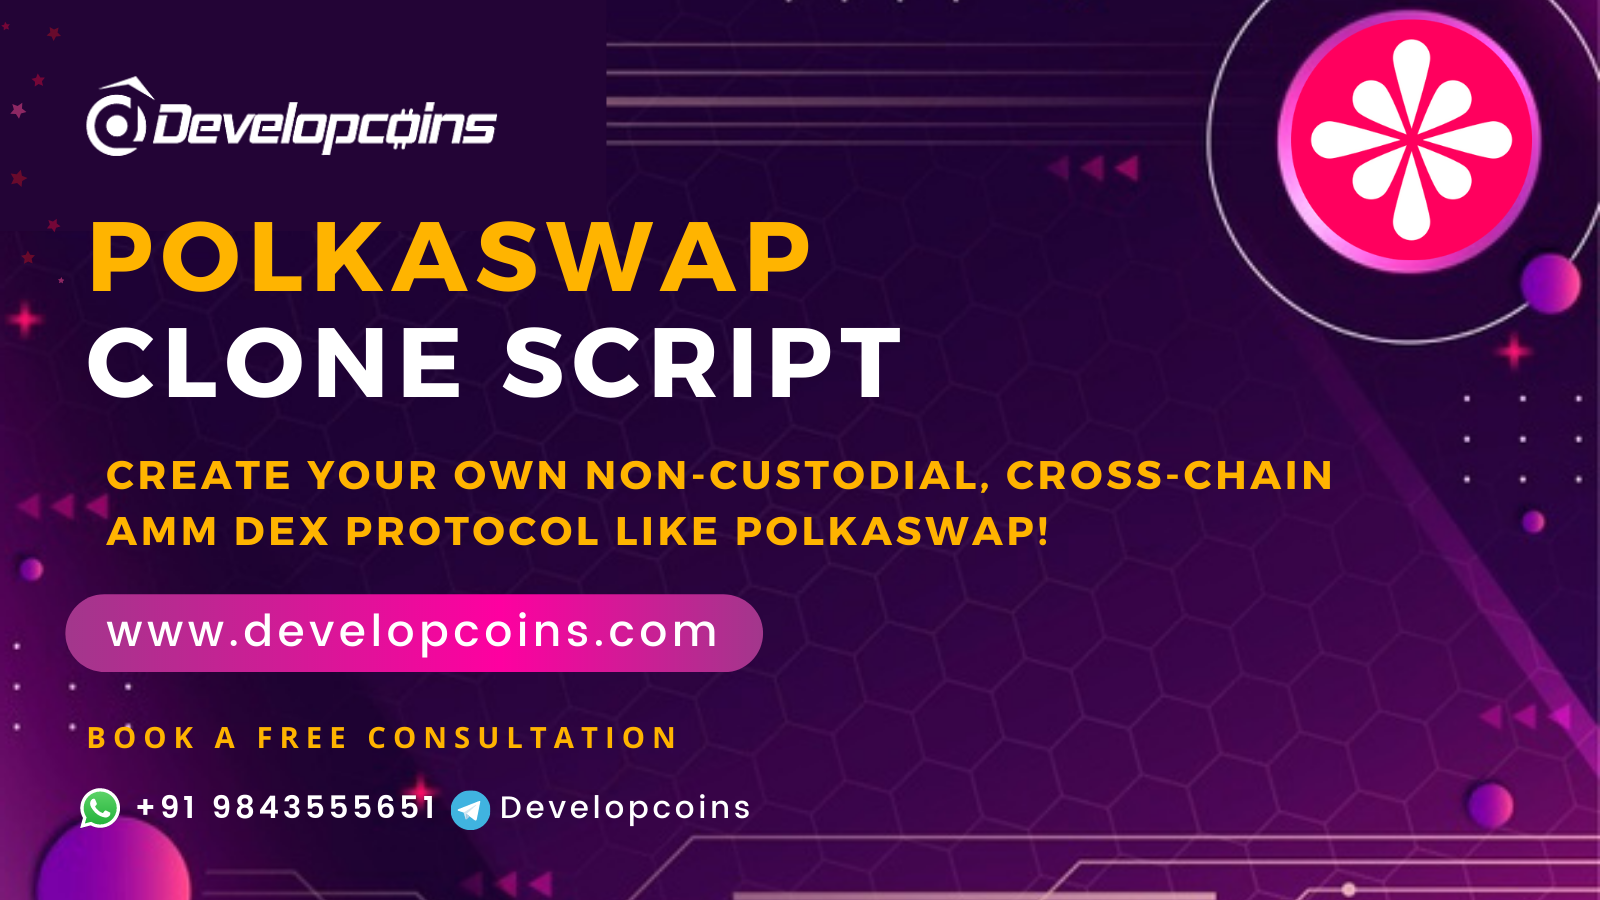 PolkaSwap Clone Script To Create DeFi based DEX like PolkaSwap